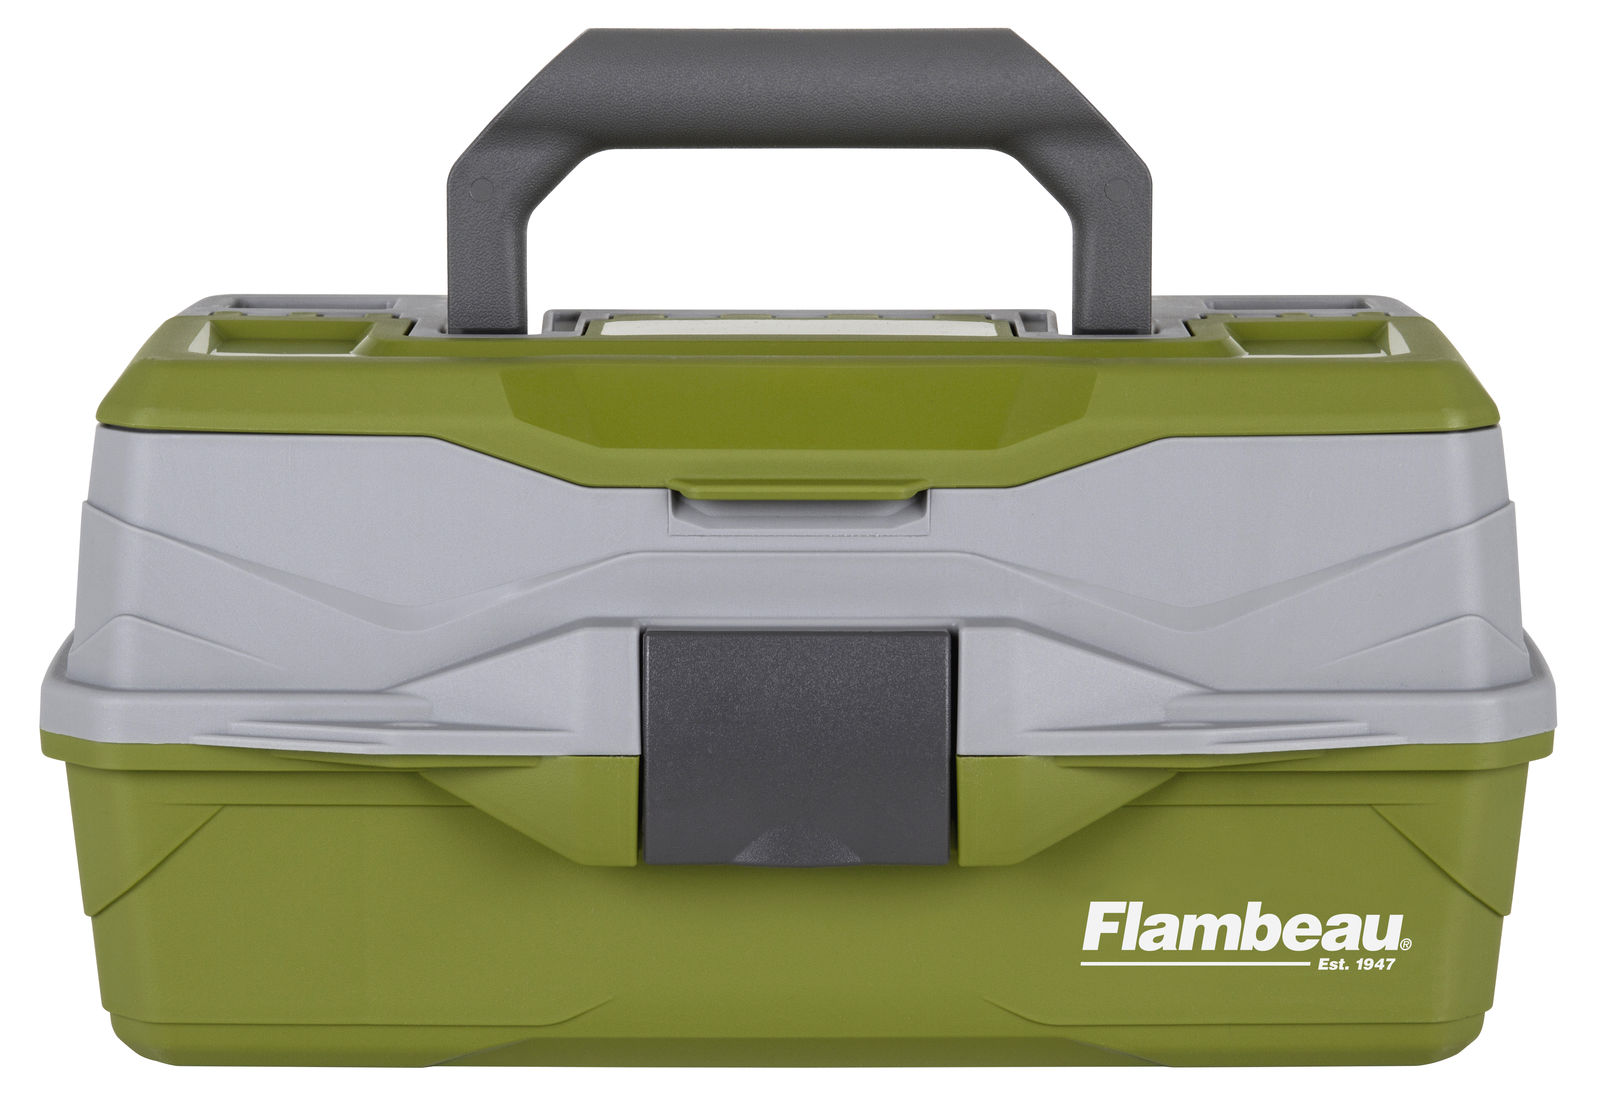 Flambeau Classic Single Tray Series Tackle Box Dark Blue 1-Tray Box NEW